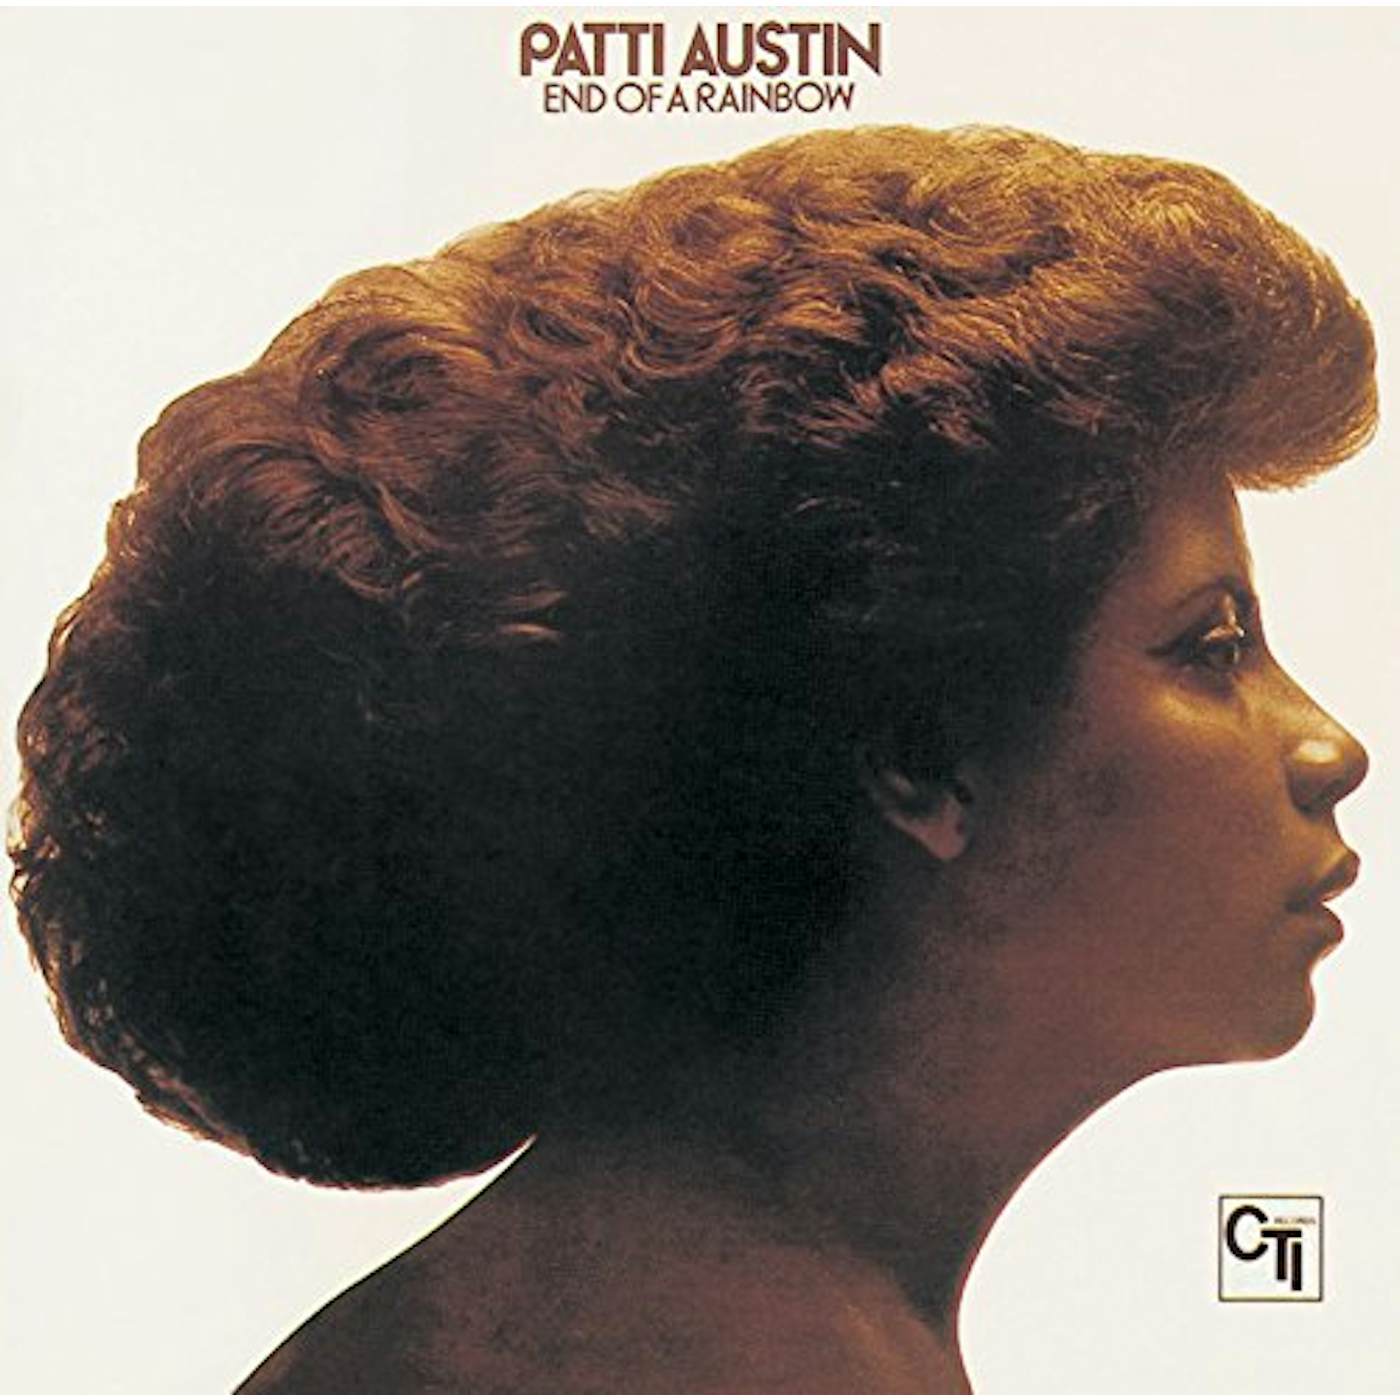 Patti Austin END OF A RAINBOW CD